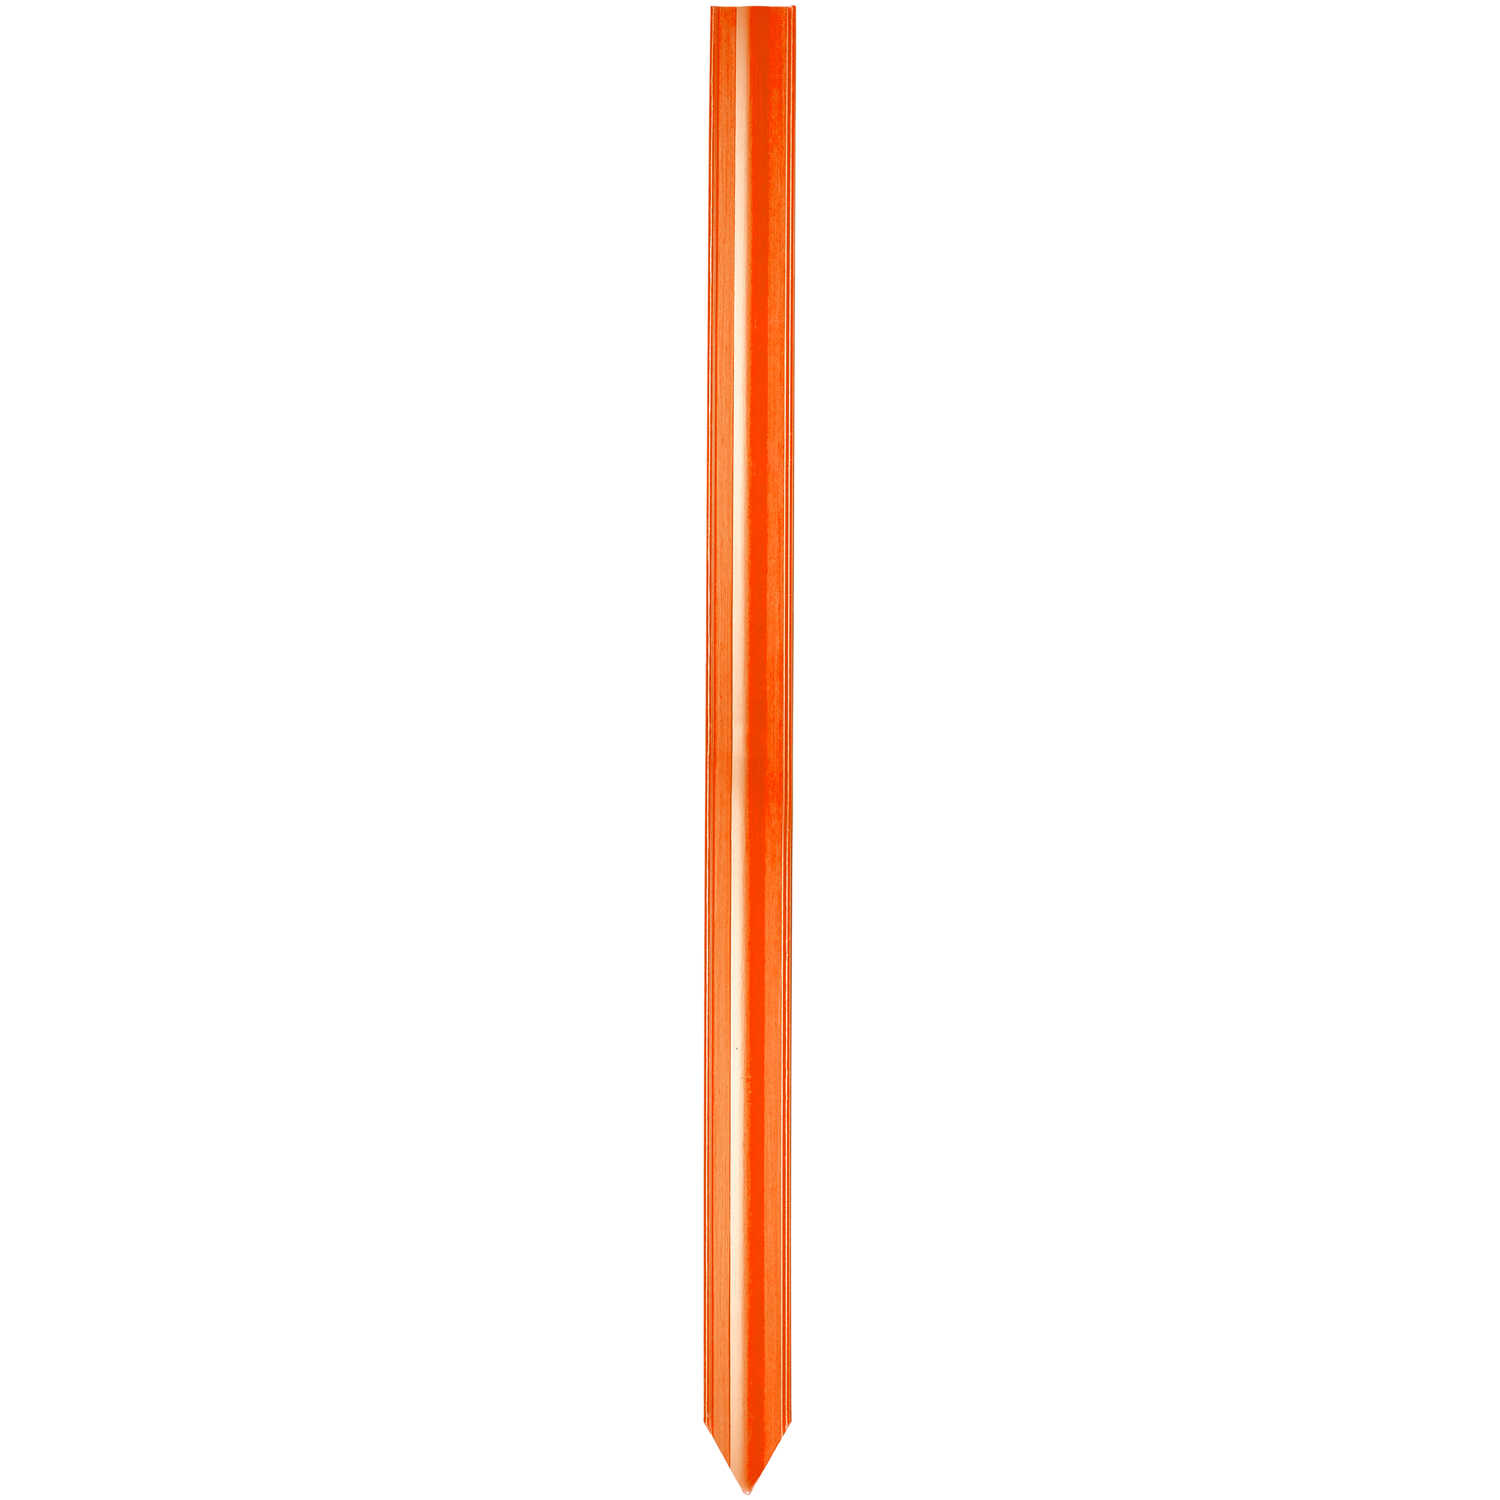 Fiberglass Survey Marker “Survey” Orange 